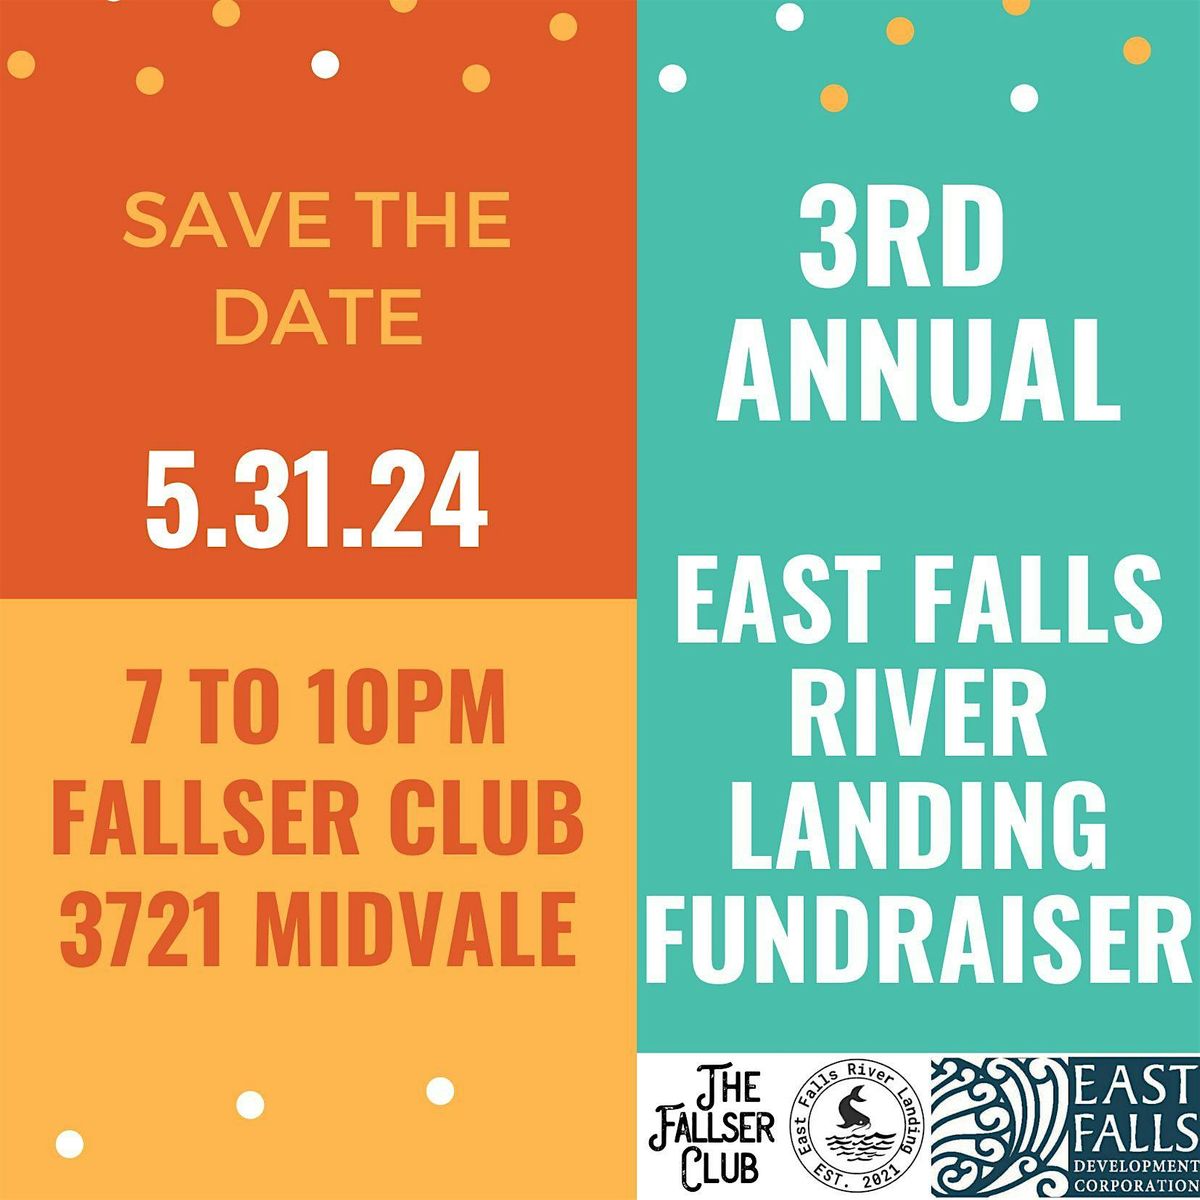 The 3rd Annual East Falls River Landing FUNdraiser